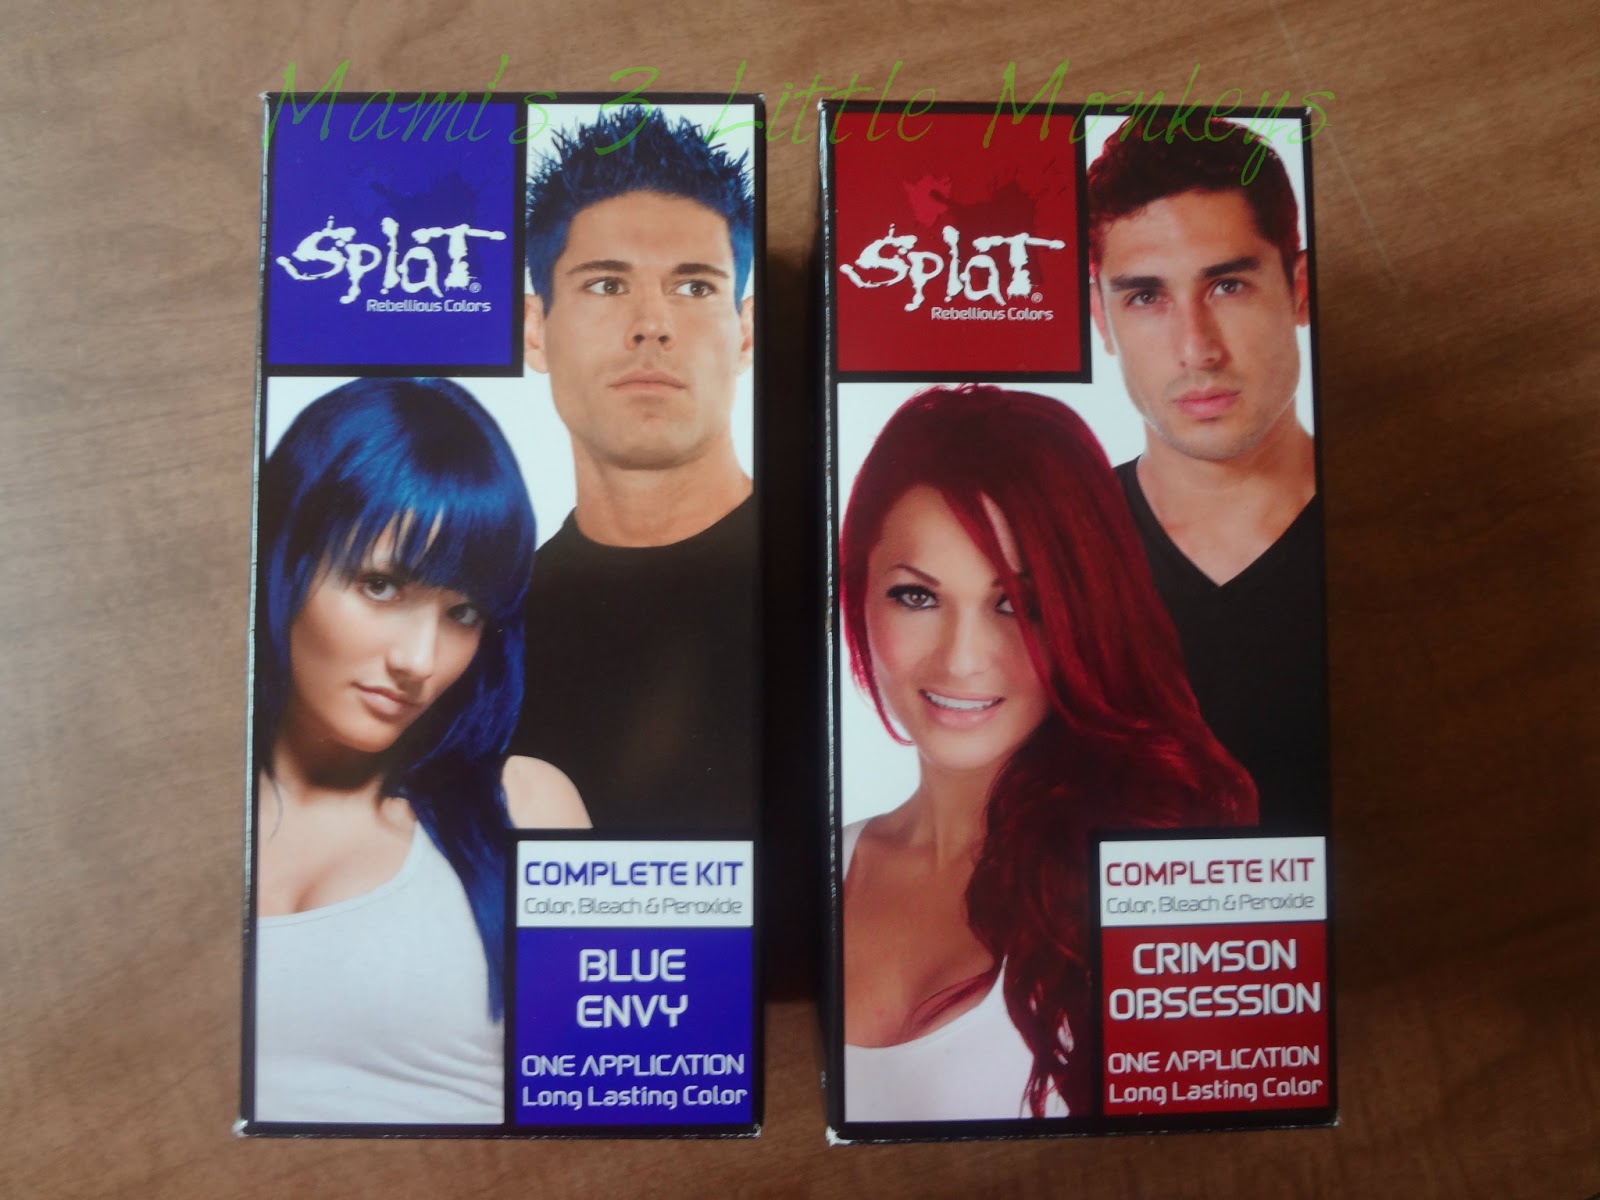 8. "Splat Rebellious Colors Semi-Permanent Hair Dye in Blue Envy" - wide 1